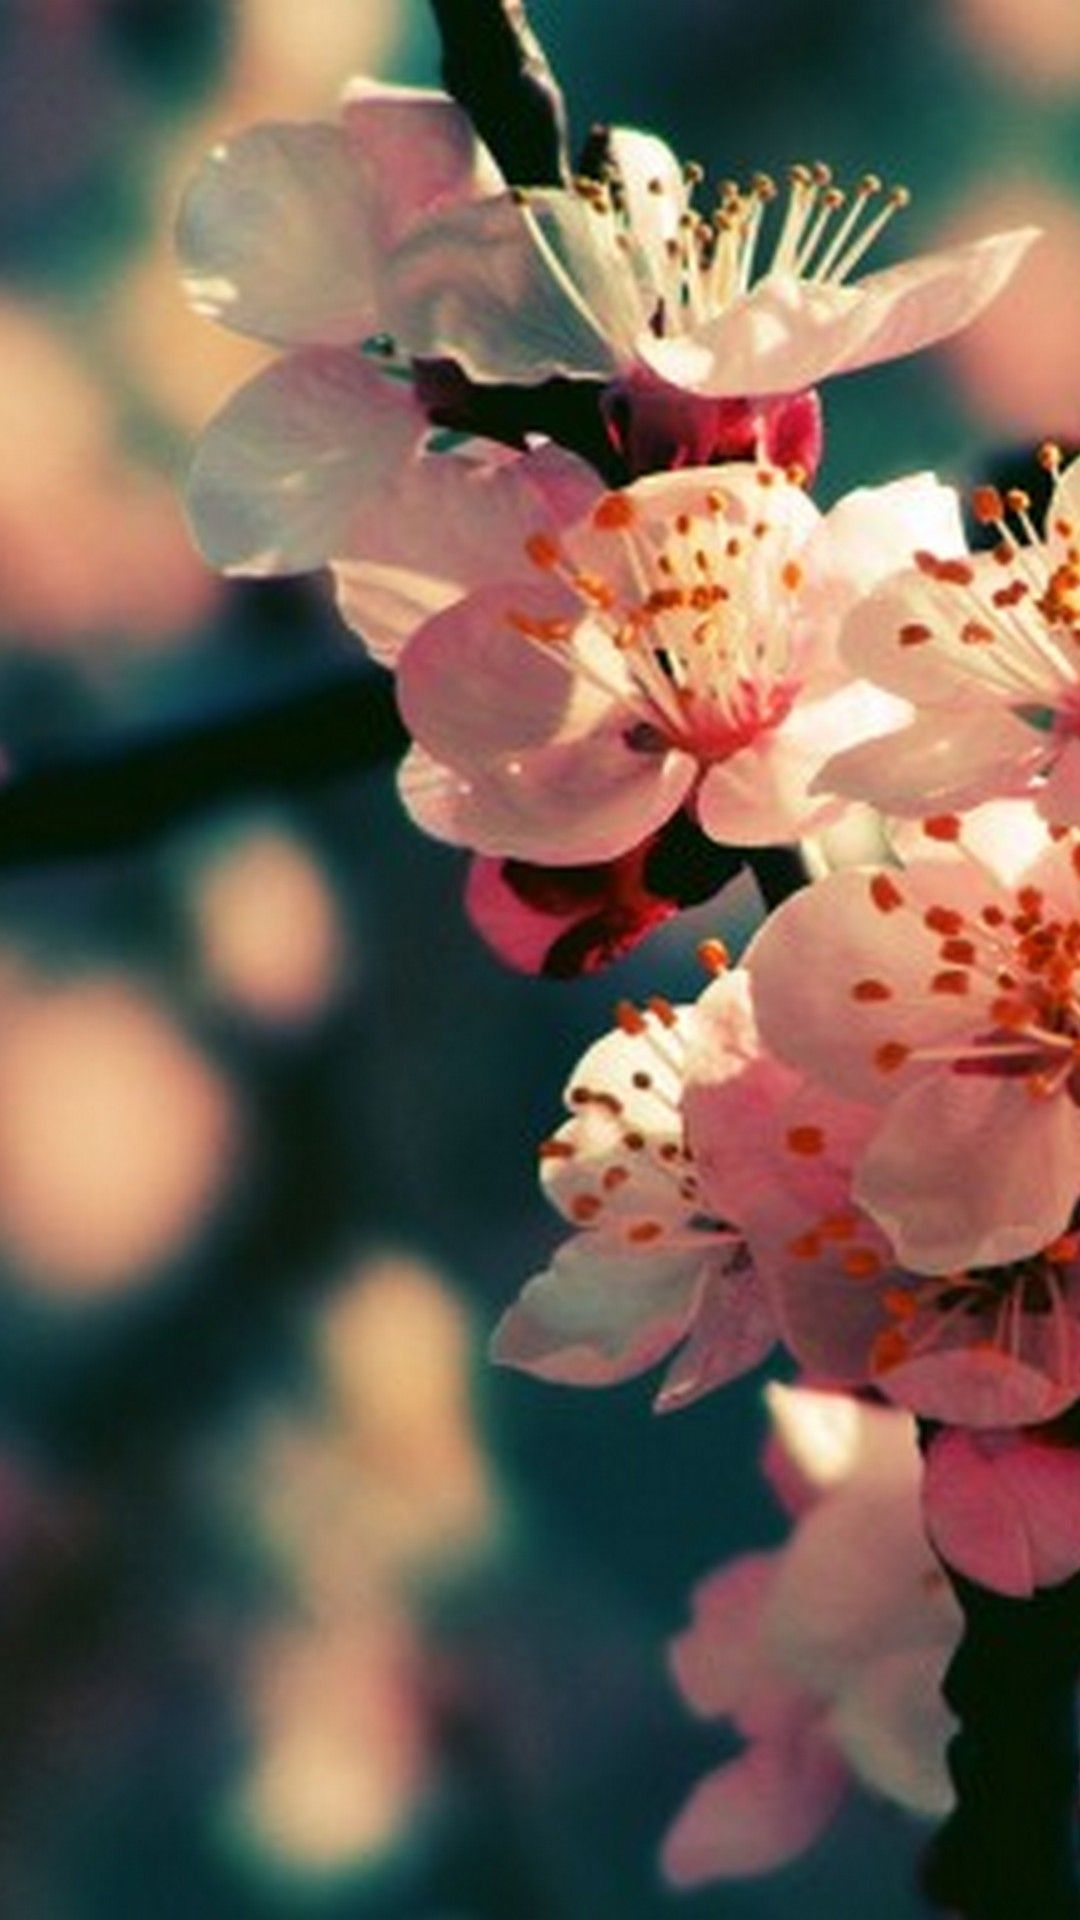 iPhone Wallpaper. Flower, Petal, Pink, Blossom, Branch, Spring